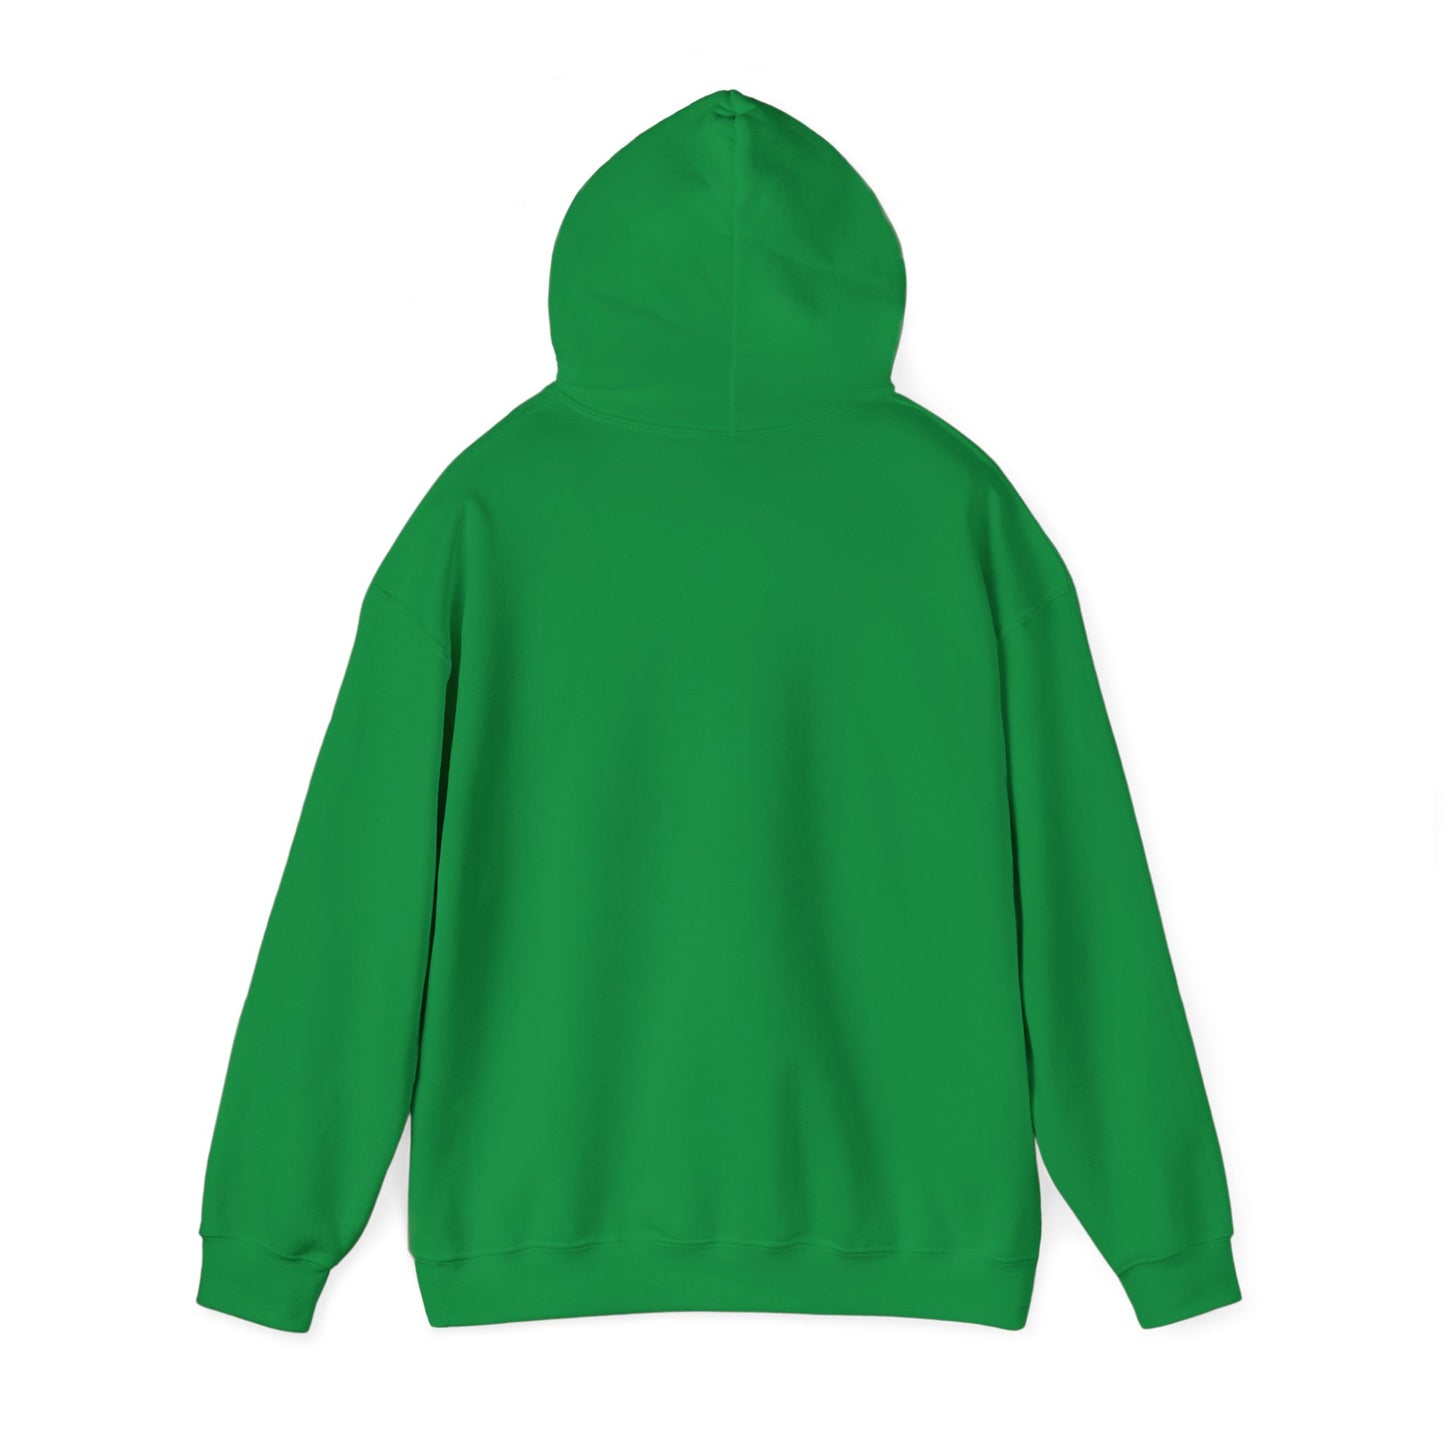 Gildan_Love Your Life_Unisex Heavy Blend™ Hooded Sweatshirt